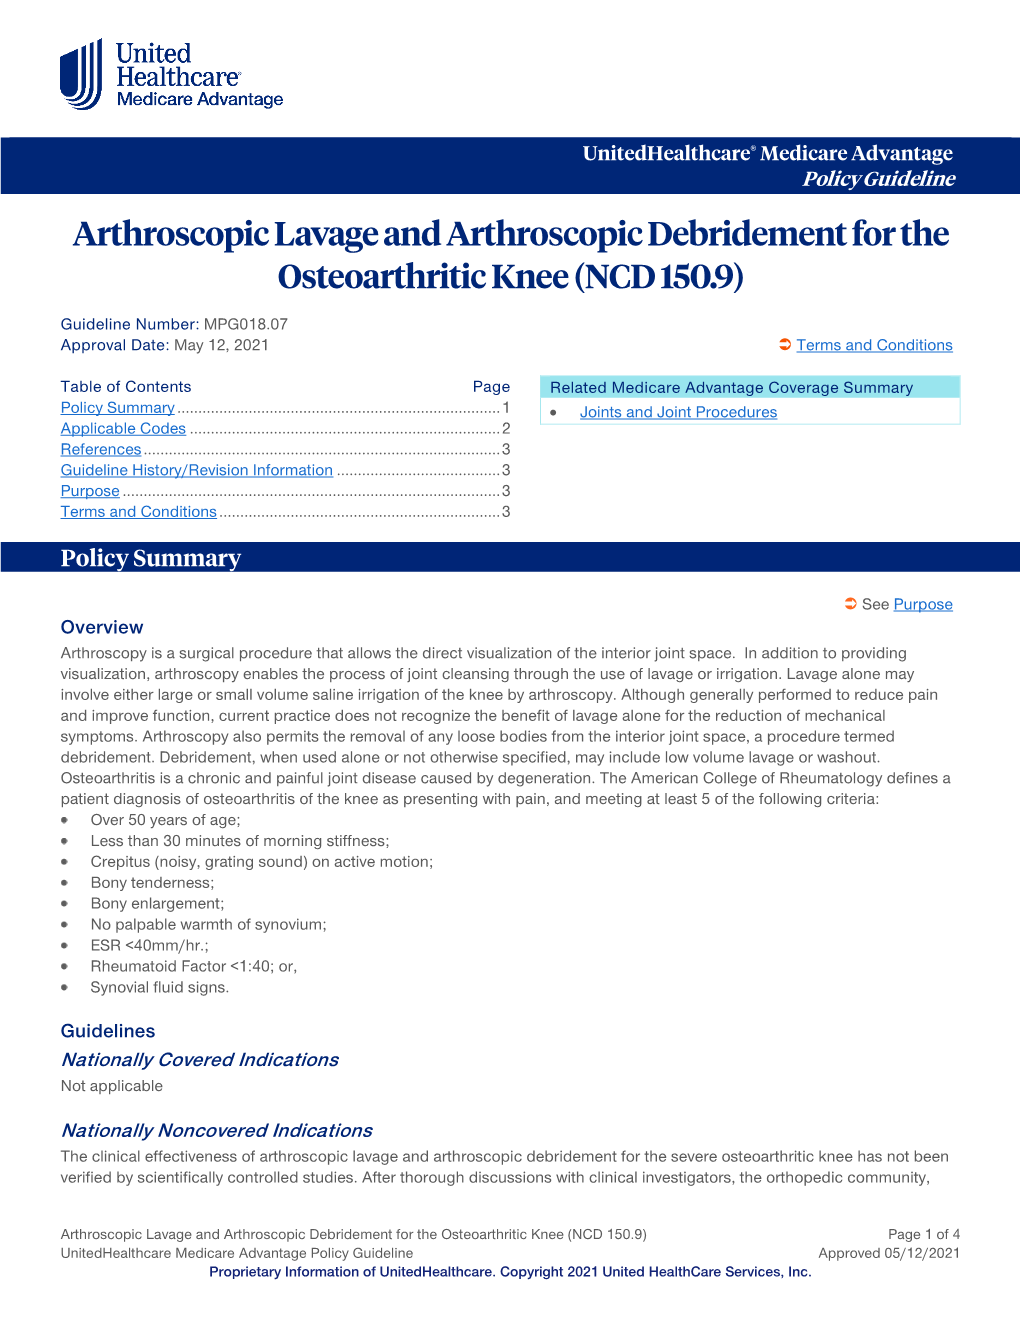 Arthroscopic Lavage and Arthroscopic Debridement for the Osteoarthritic Knee (NCD 150.9)